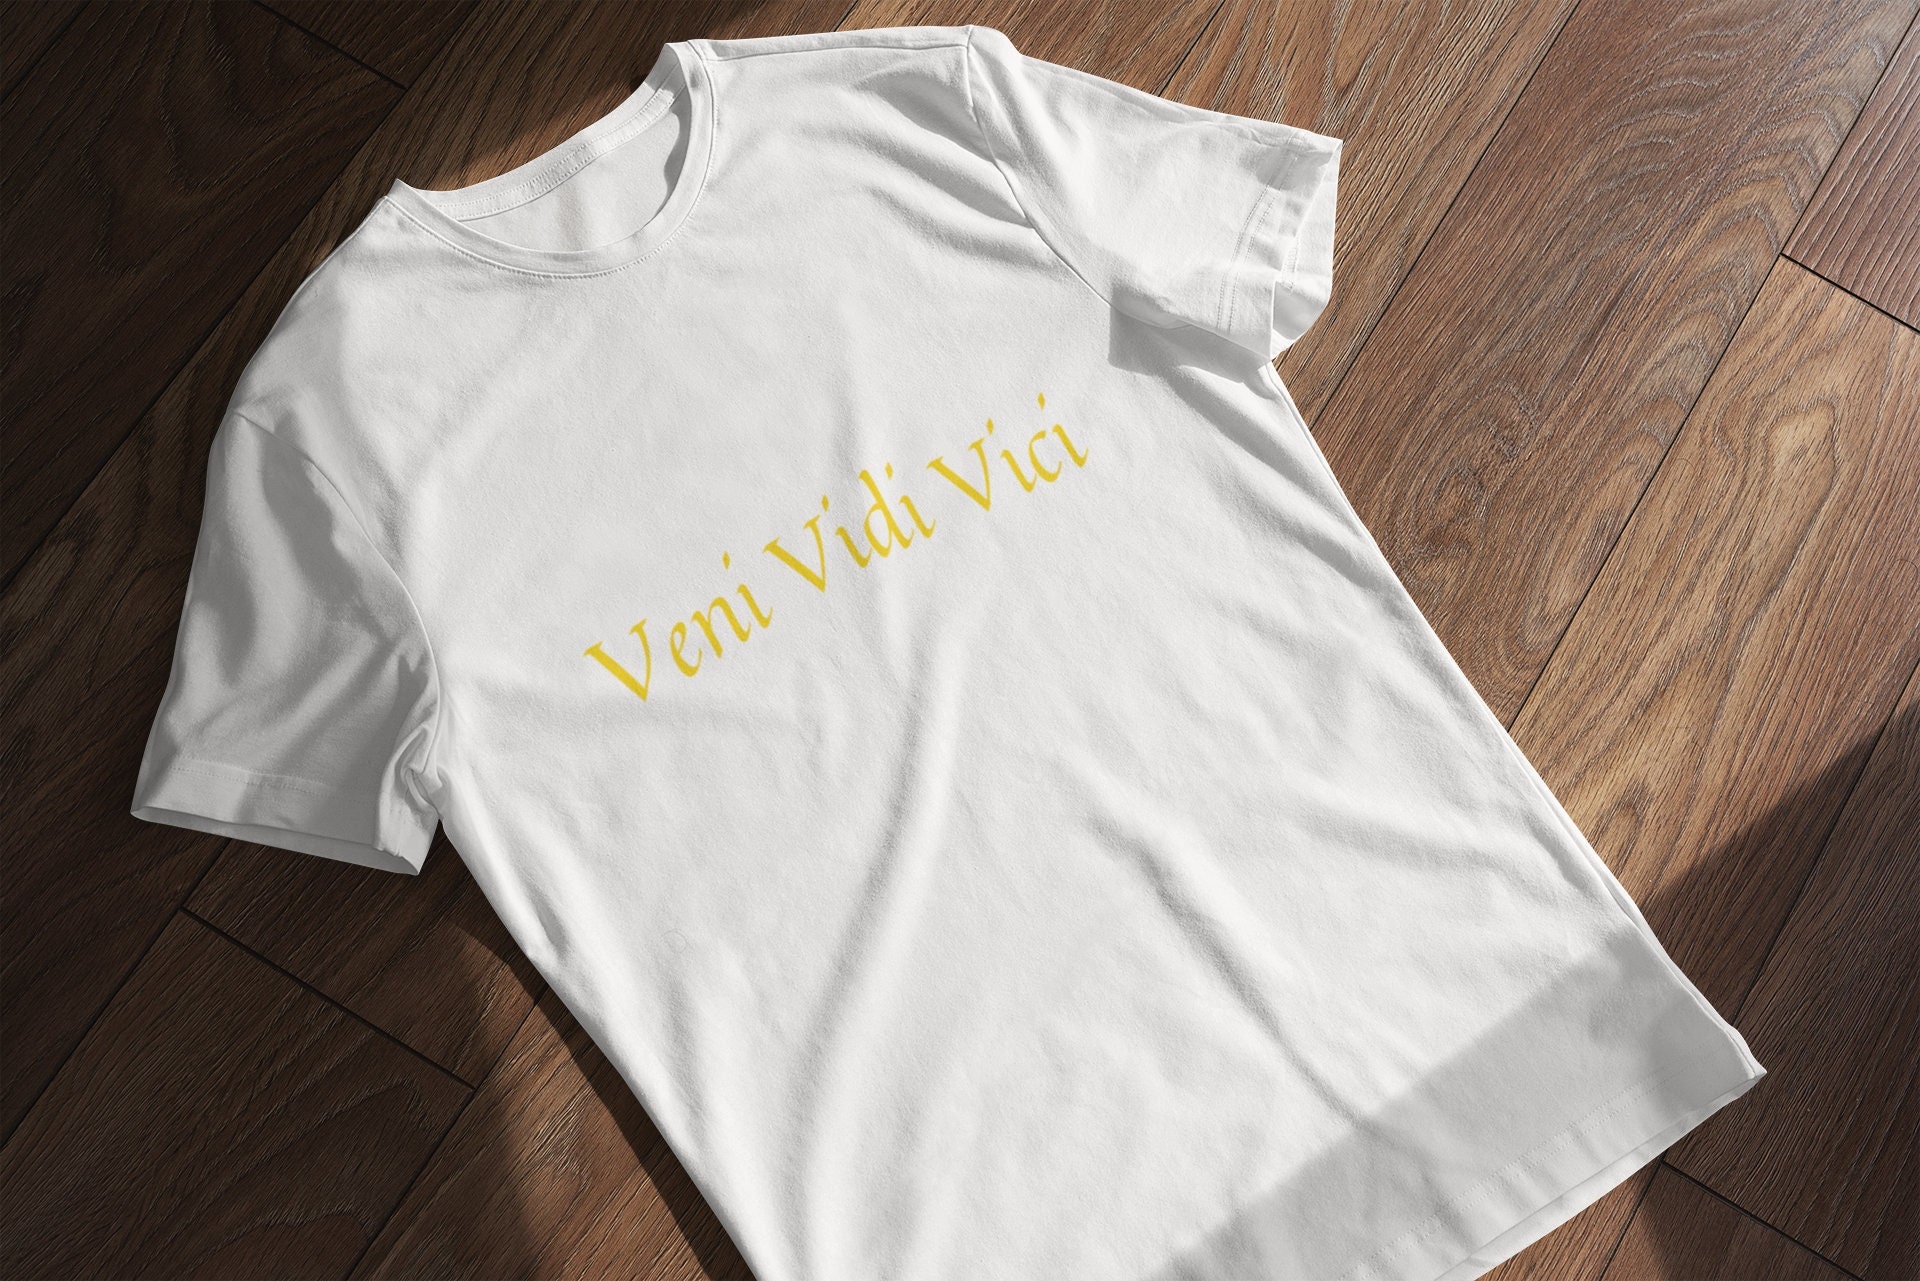 Camiseta Veni Vidi Vici - branca - estampa grande - ZOO